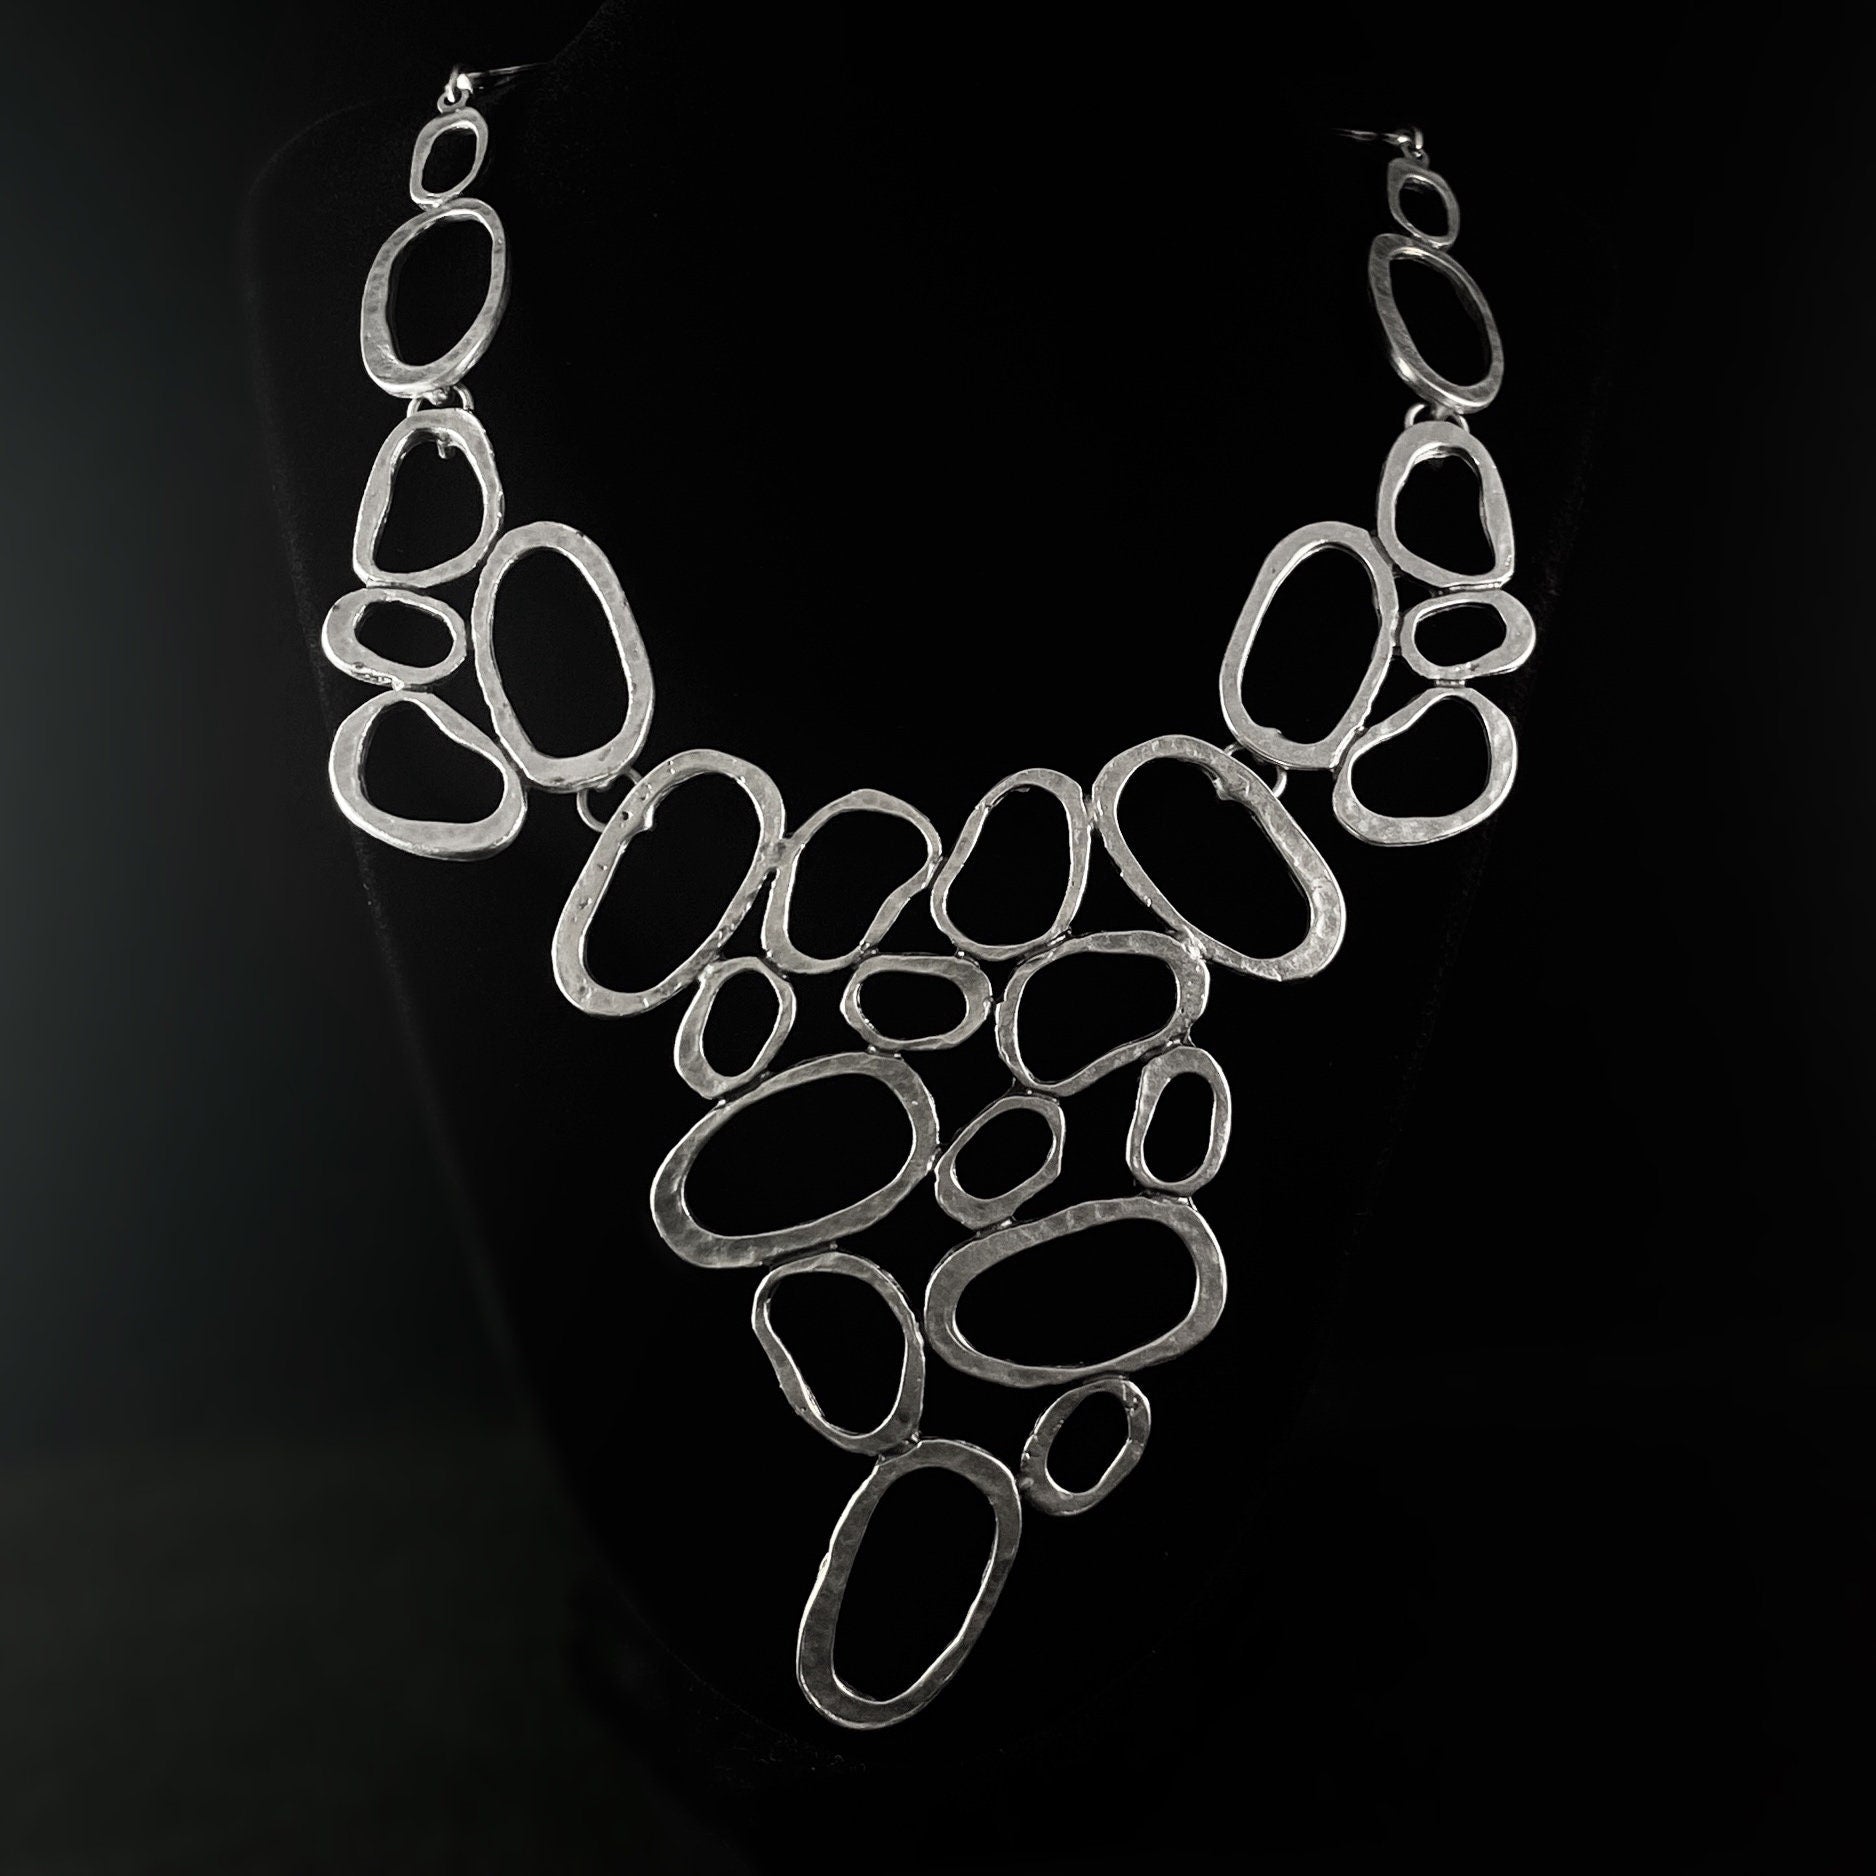 Flowing Silver Oval Statement Necklace, Handmade, Nickel Free-Noir